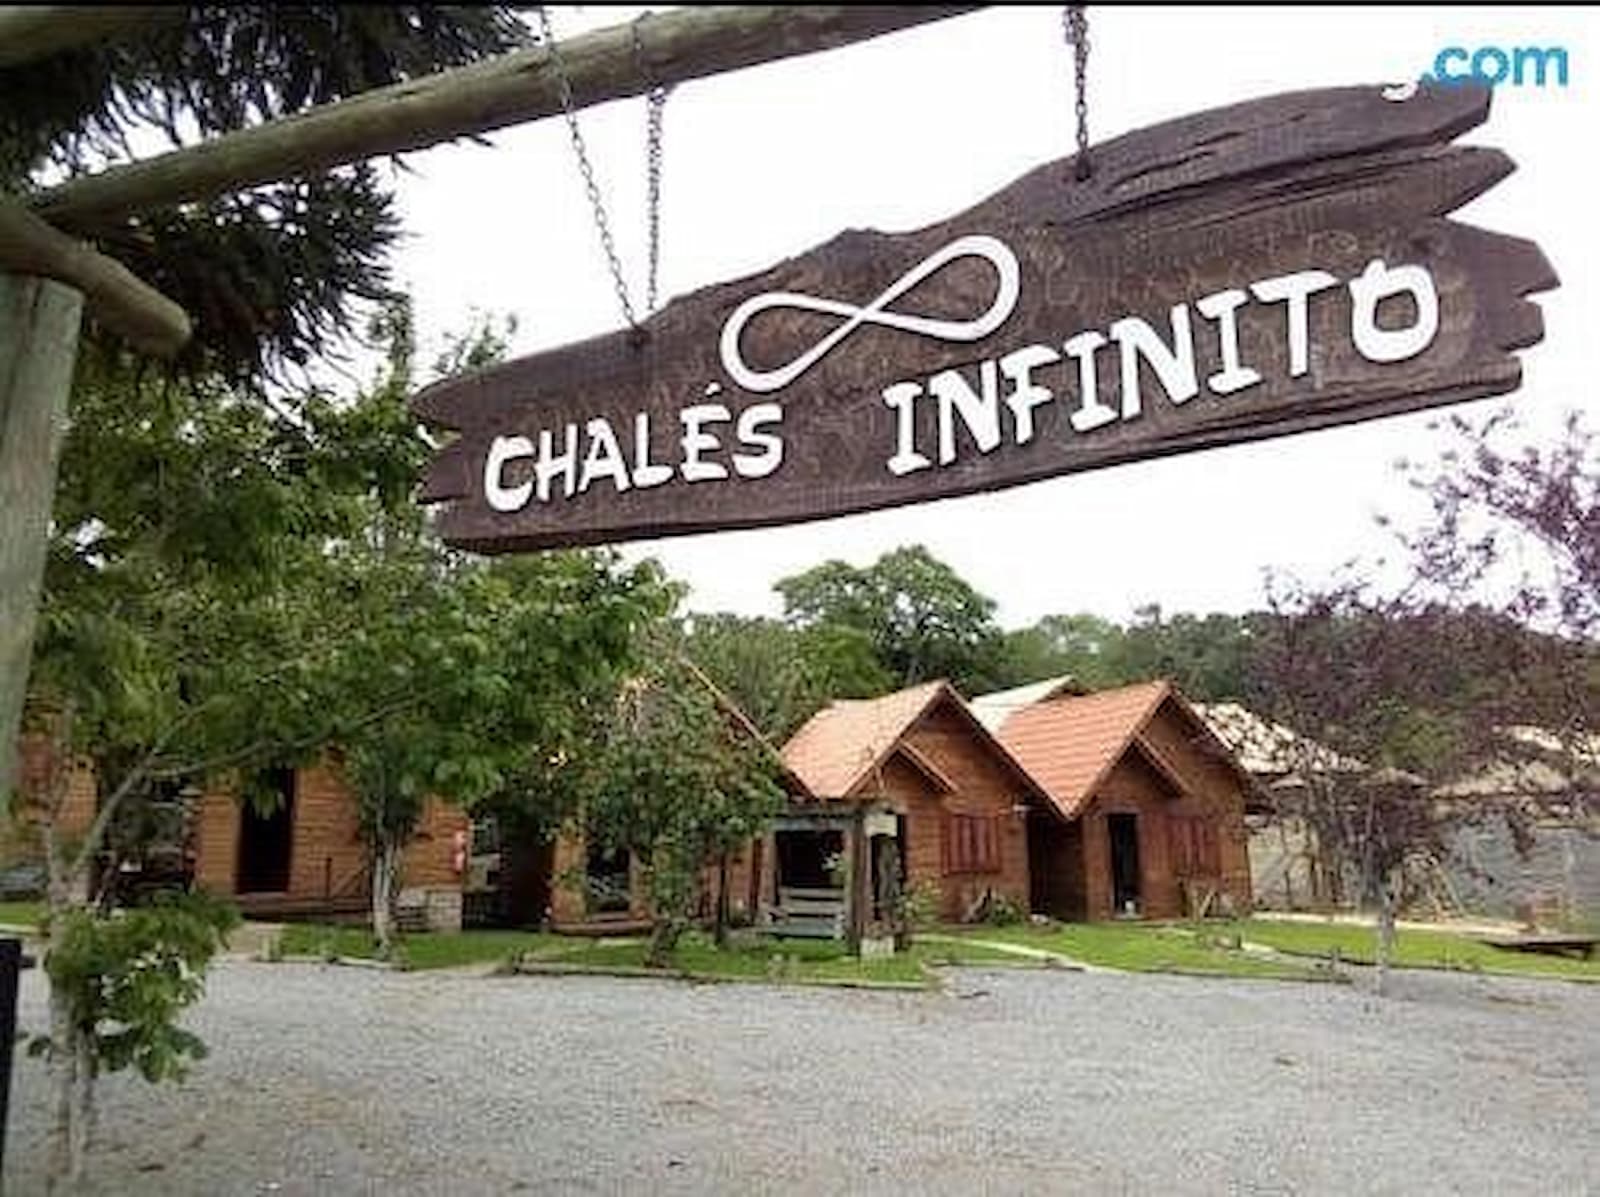 Chalés Infinito